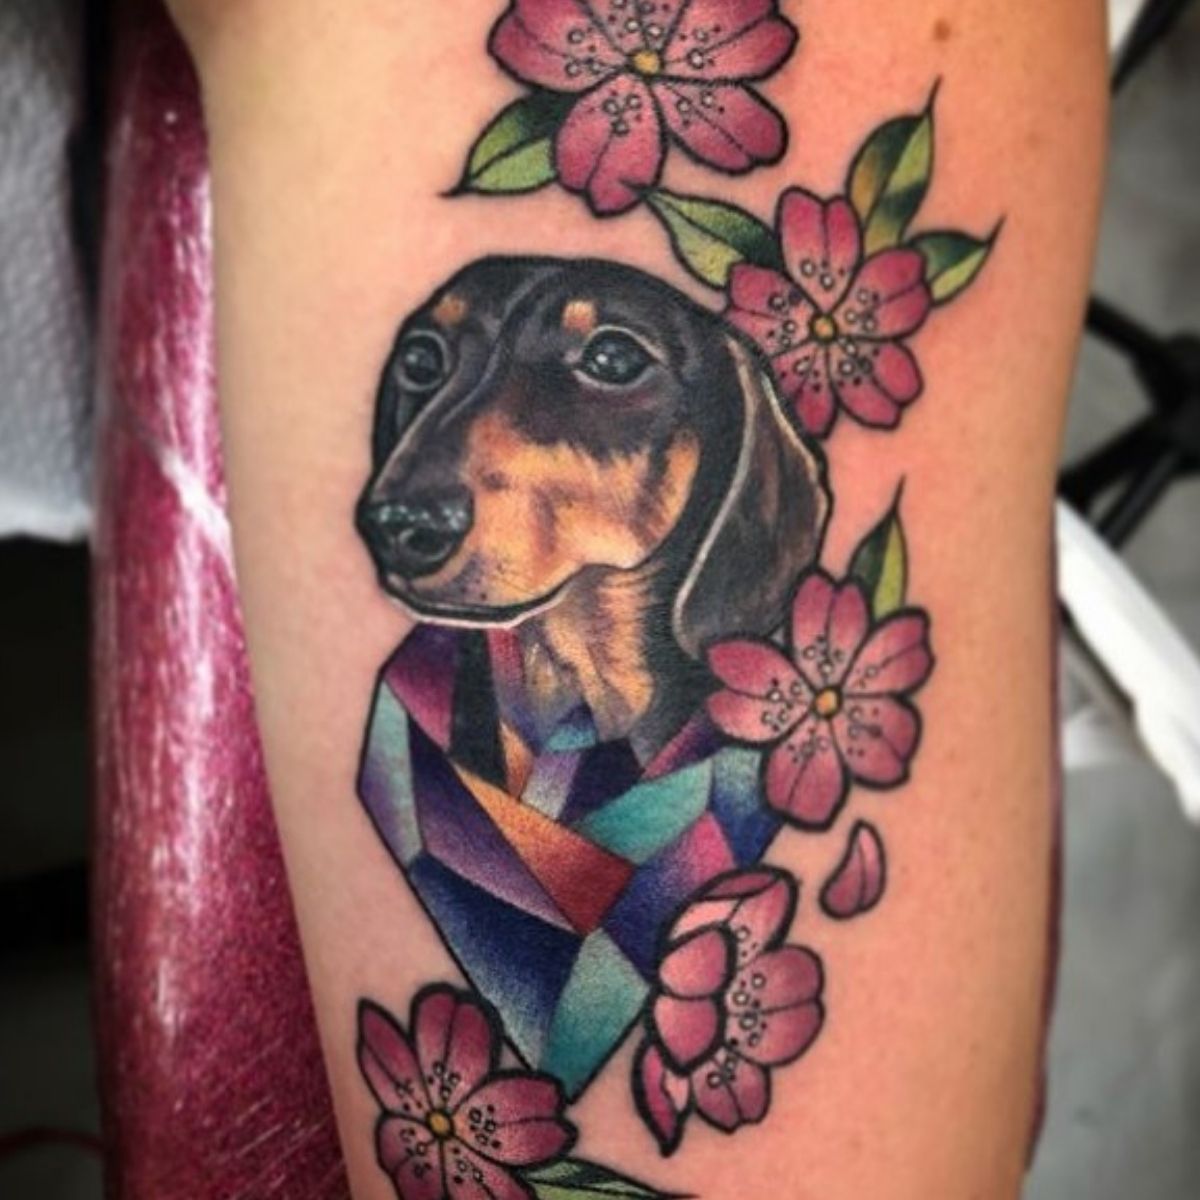 Dachshund Bonus on Twitter Show me your tattoo dogtattoo cutedog  dogsofinstagram Dog dogsoftwitter httpstcozDBAyfL169  Twitter